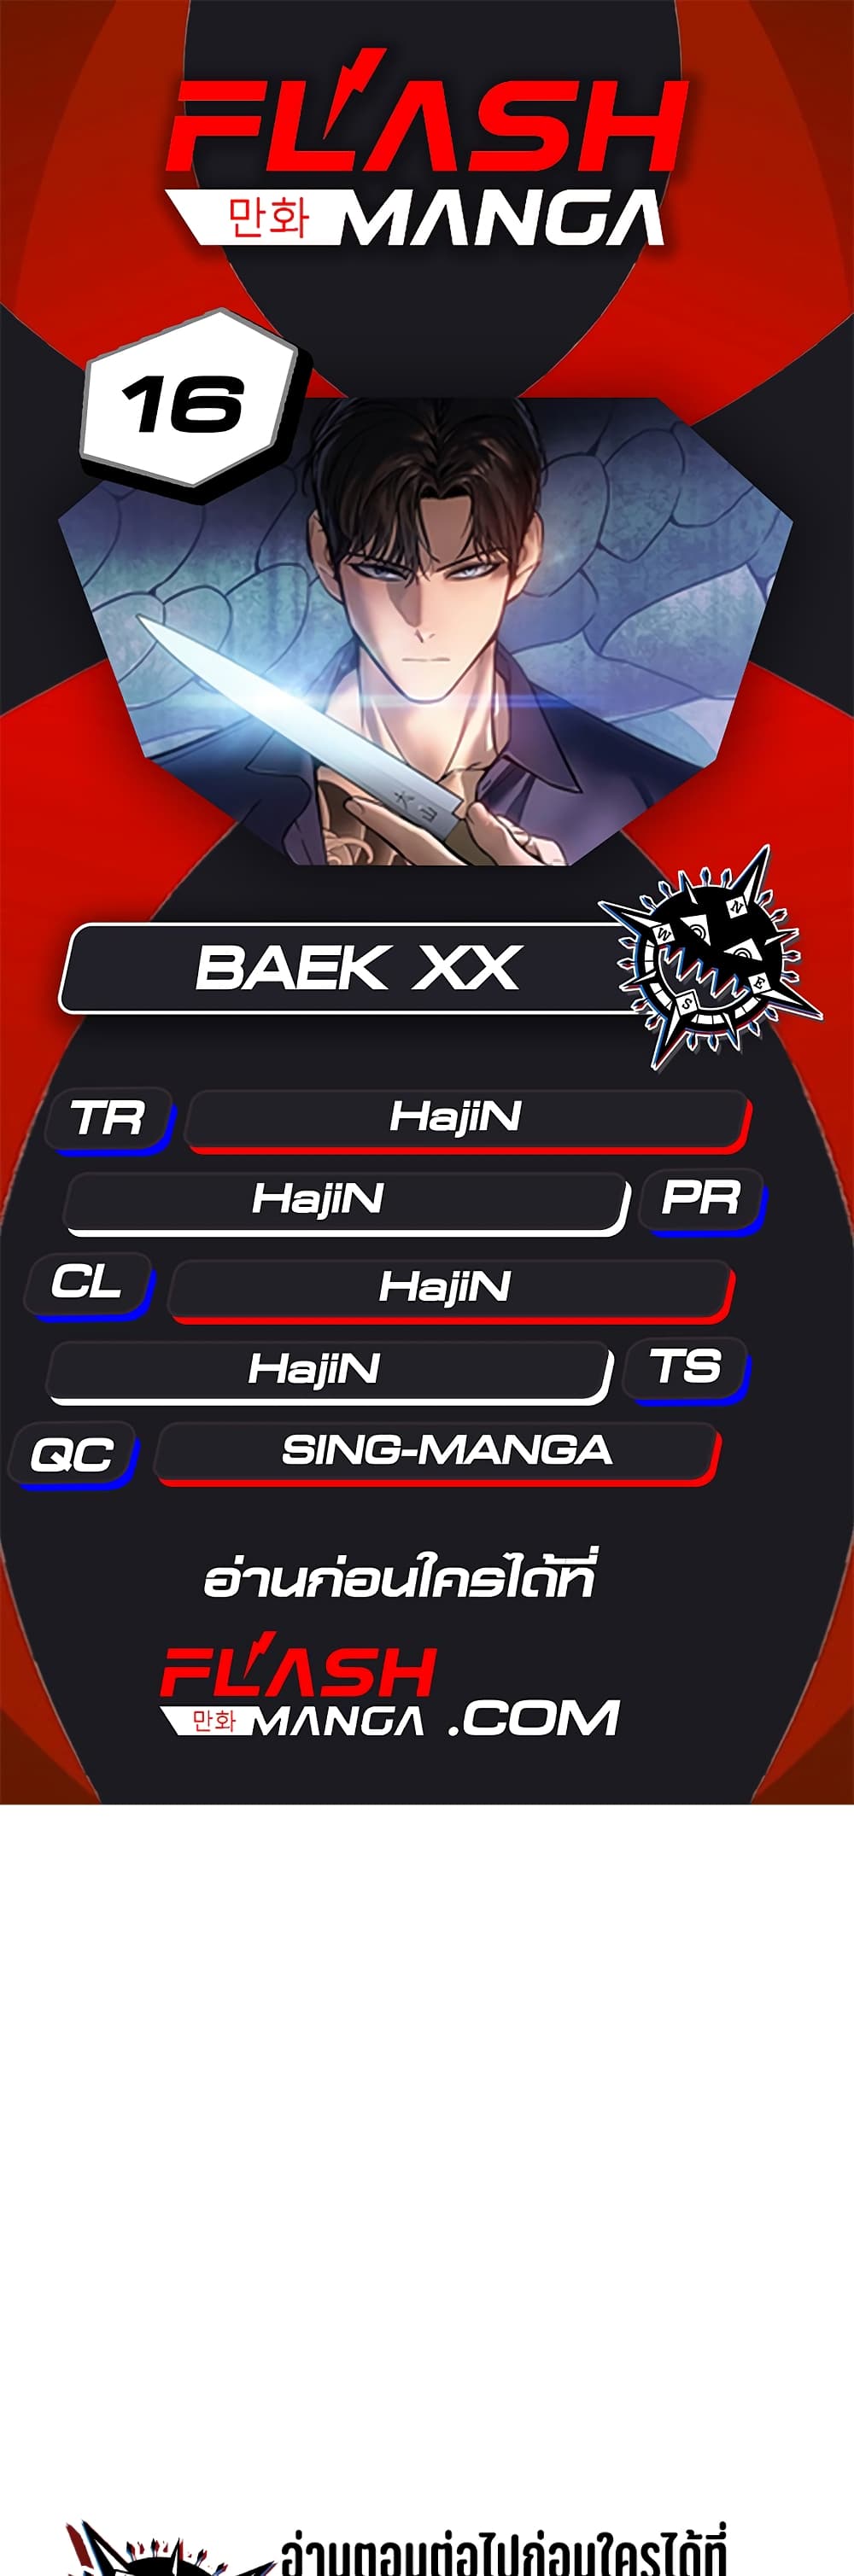 BaekXX 16-16